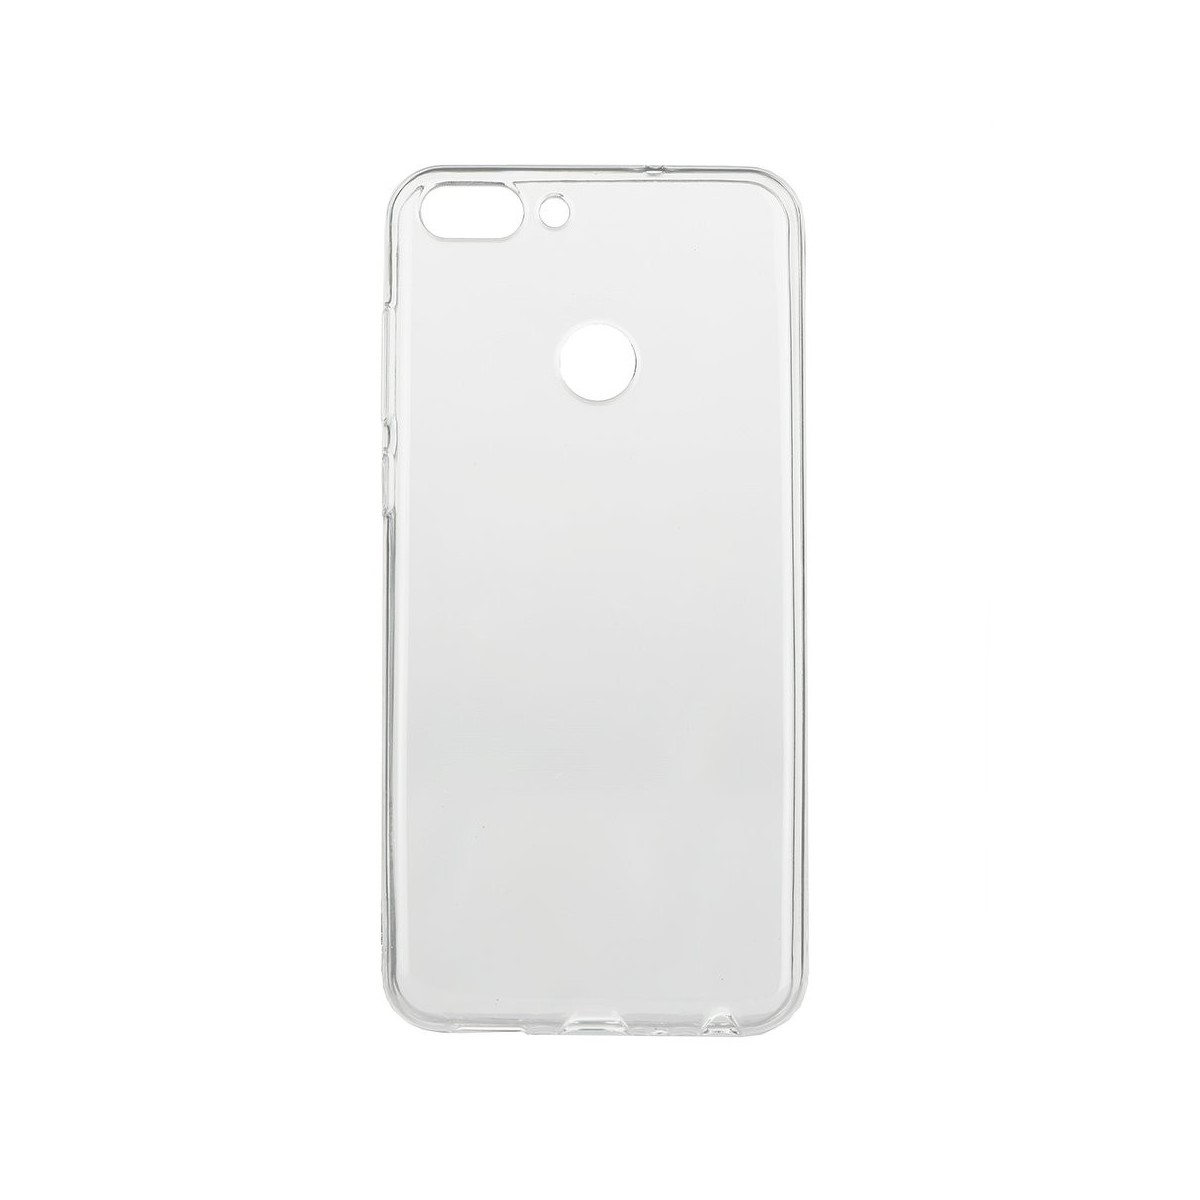 Coque Huawei P Smart transparente et souple - Crazy Kase